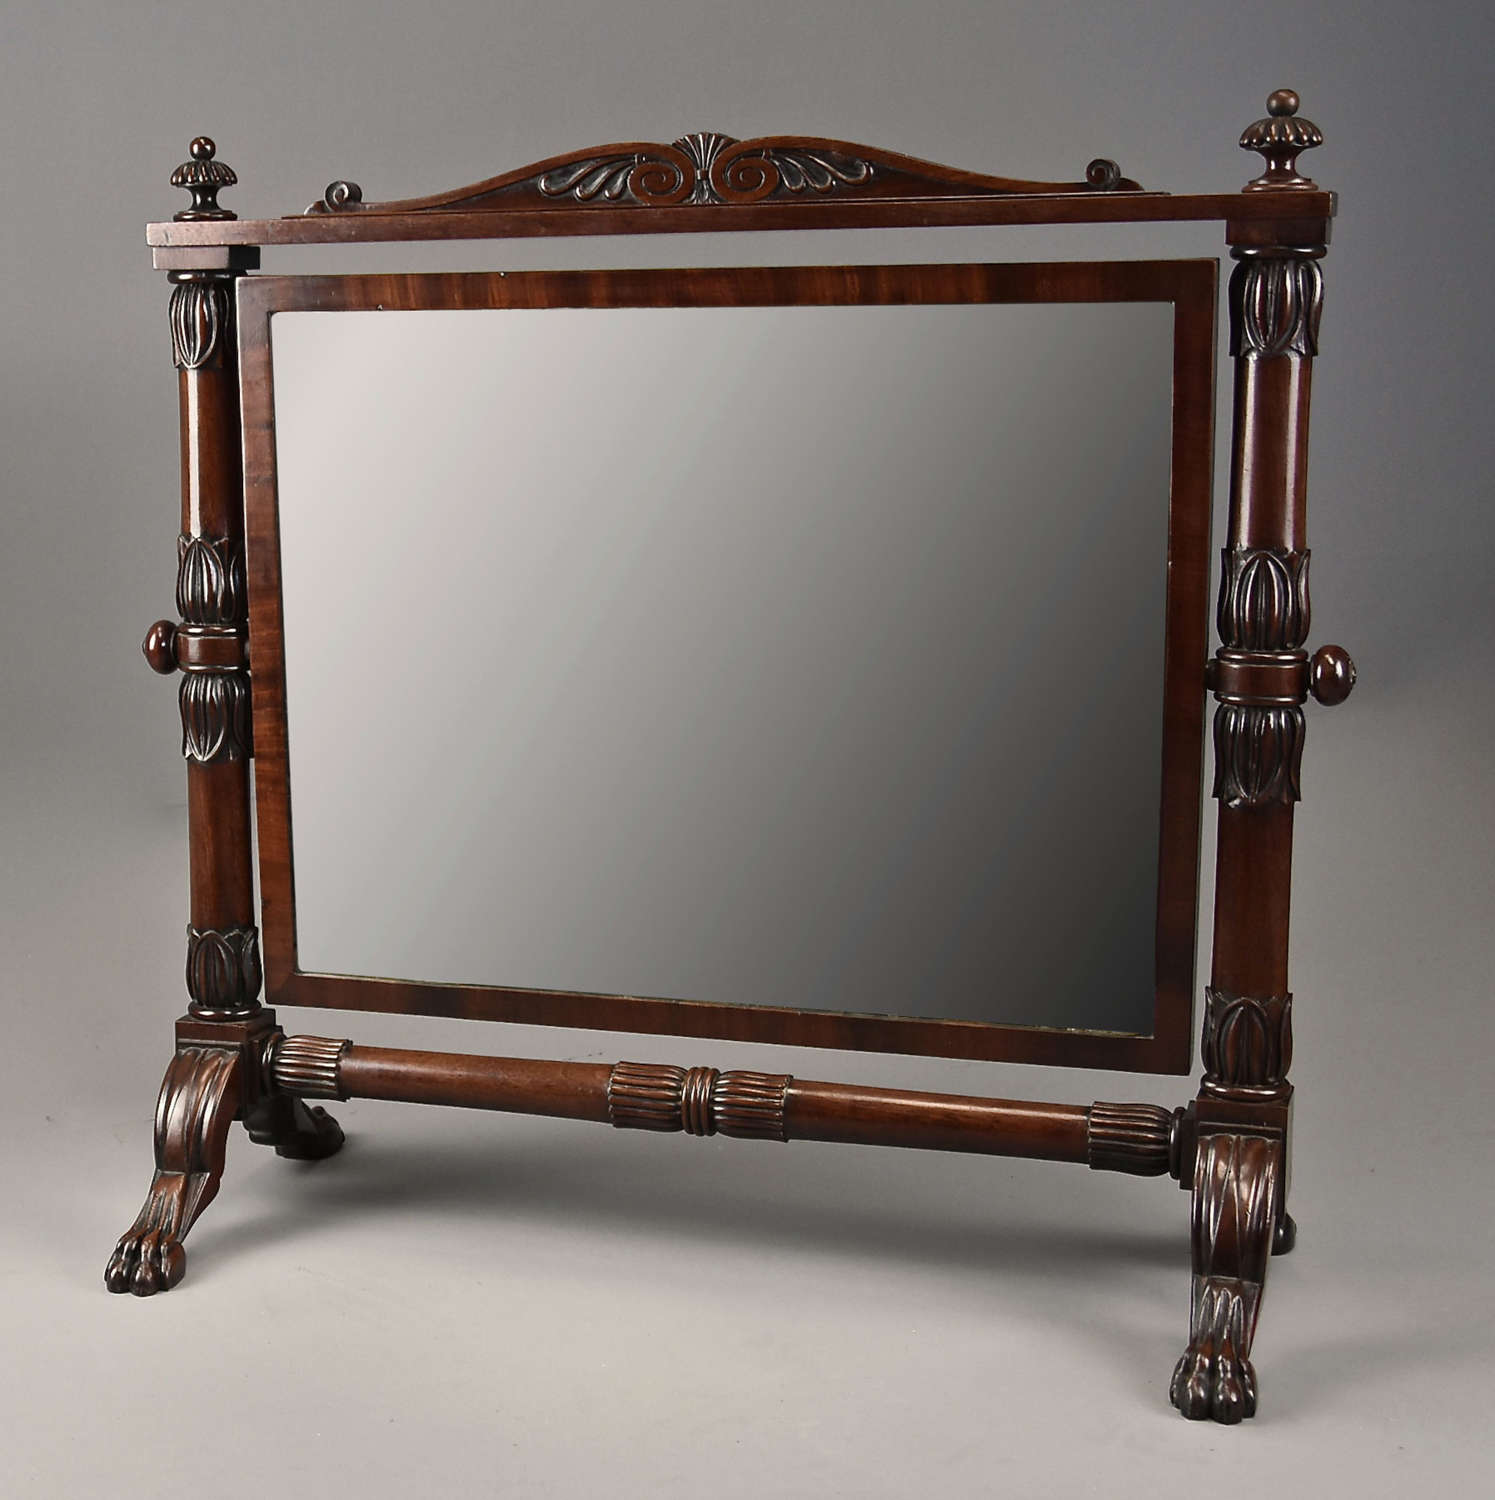 Superb quality 19th century Regency Cuban mahogany cheval table mirror